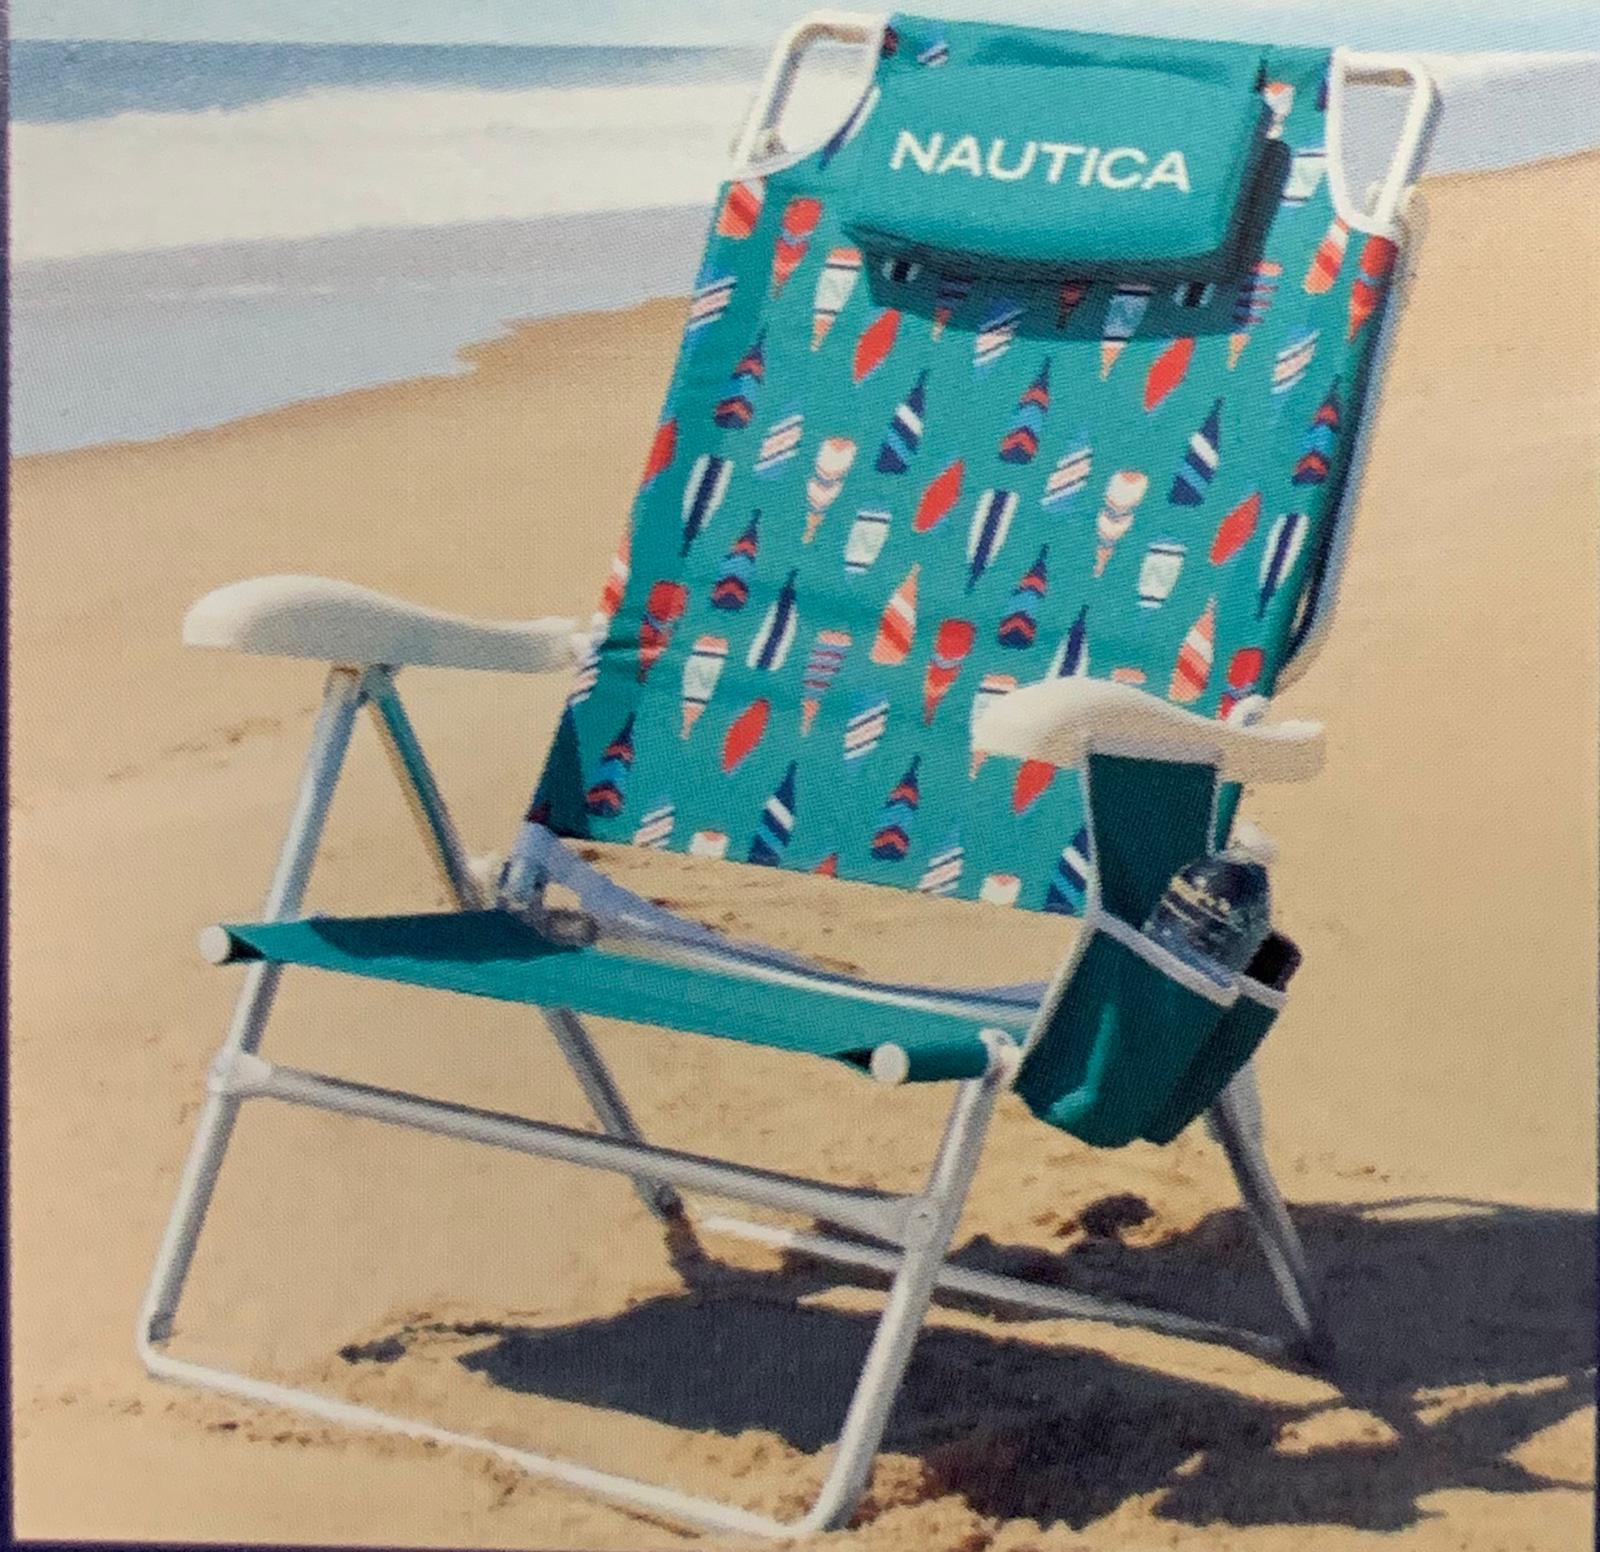 nautica beach chair and umbrella set